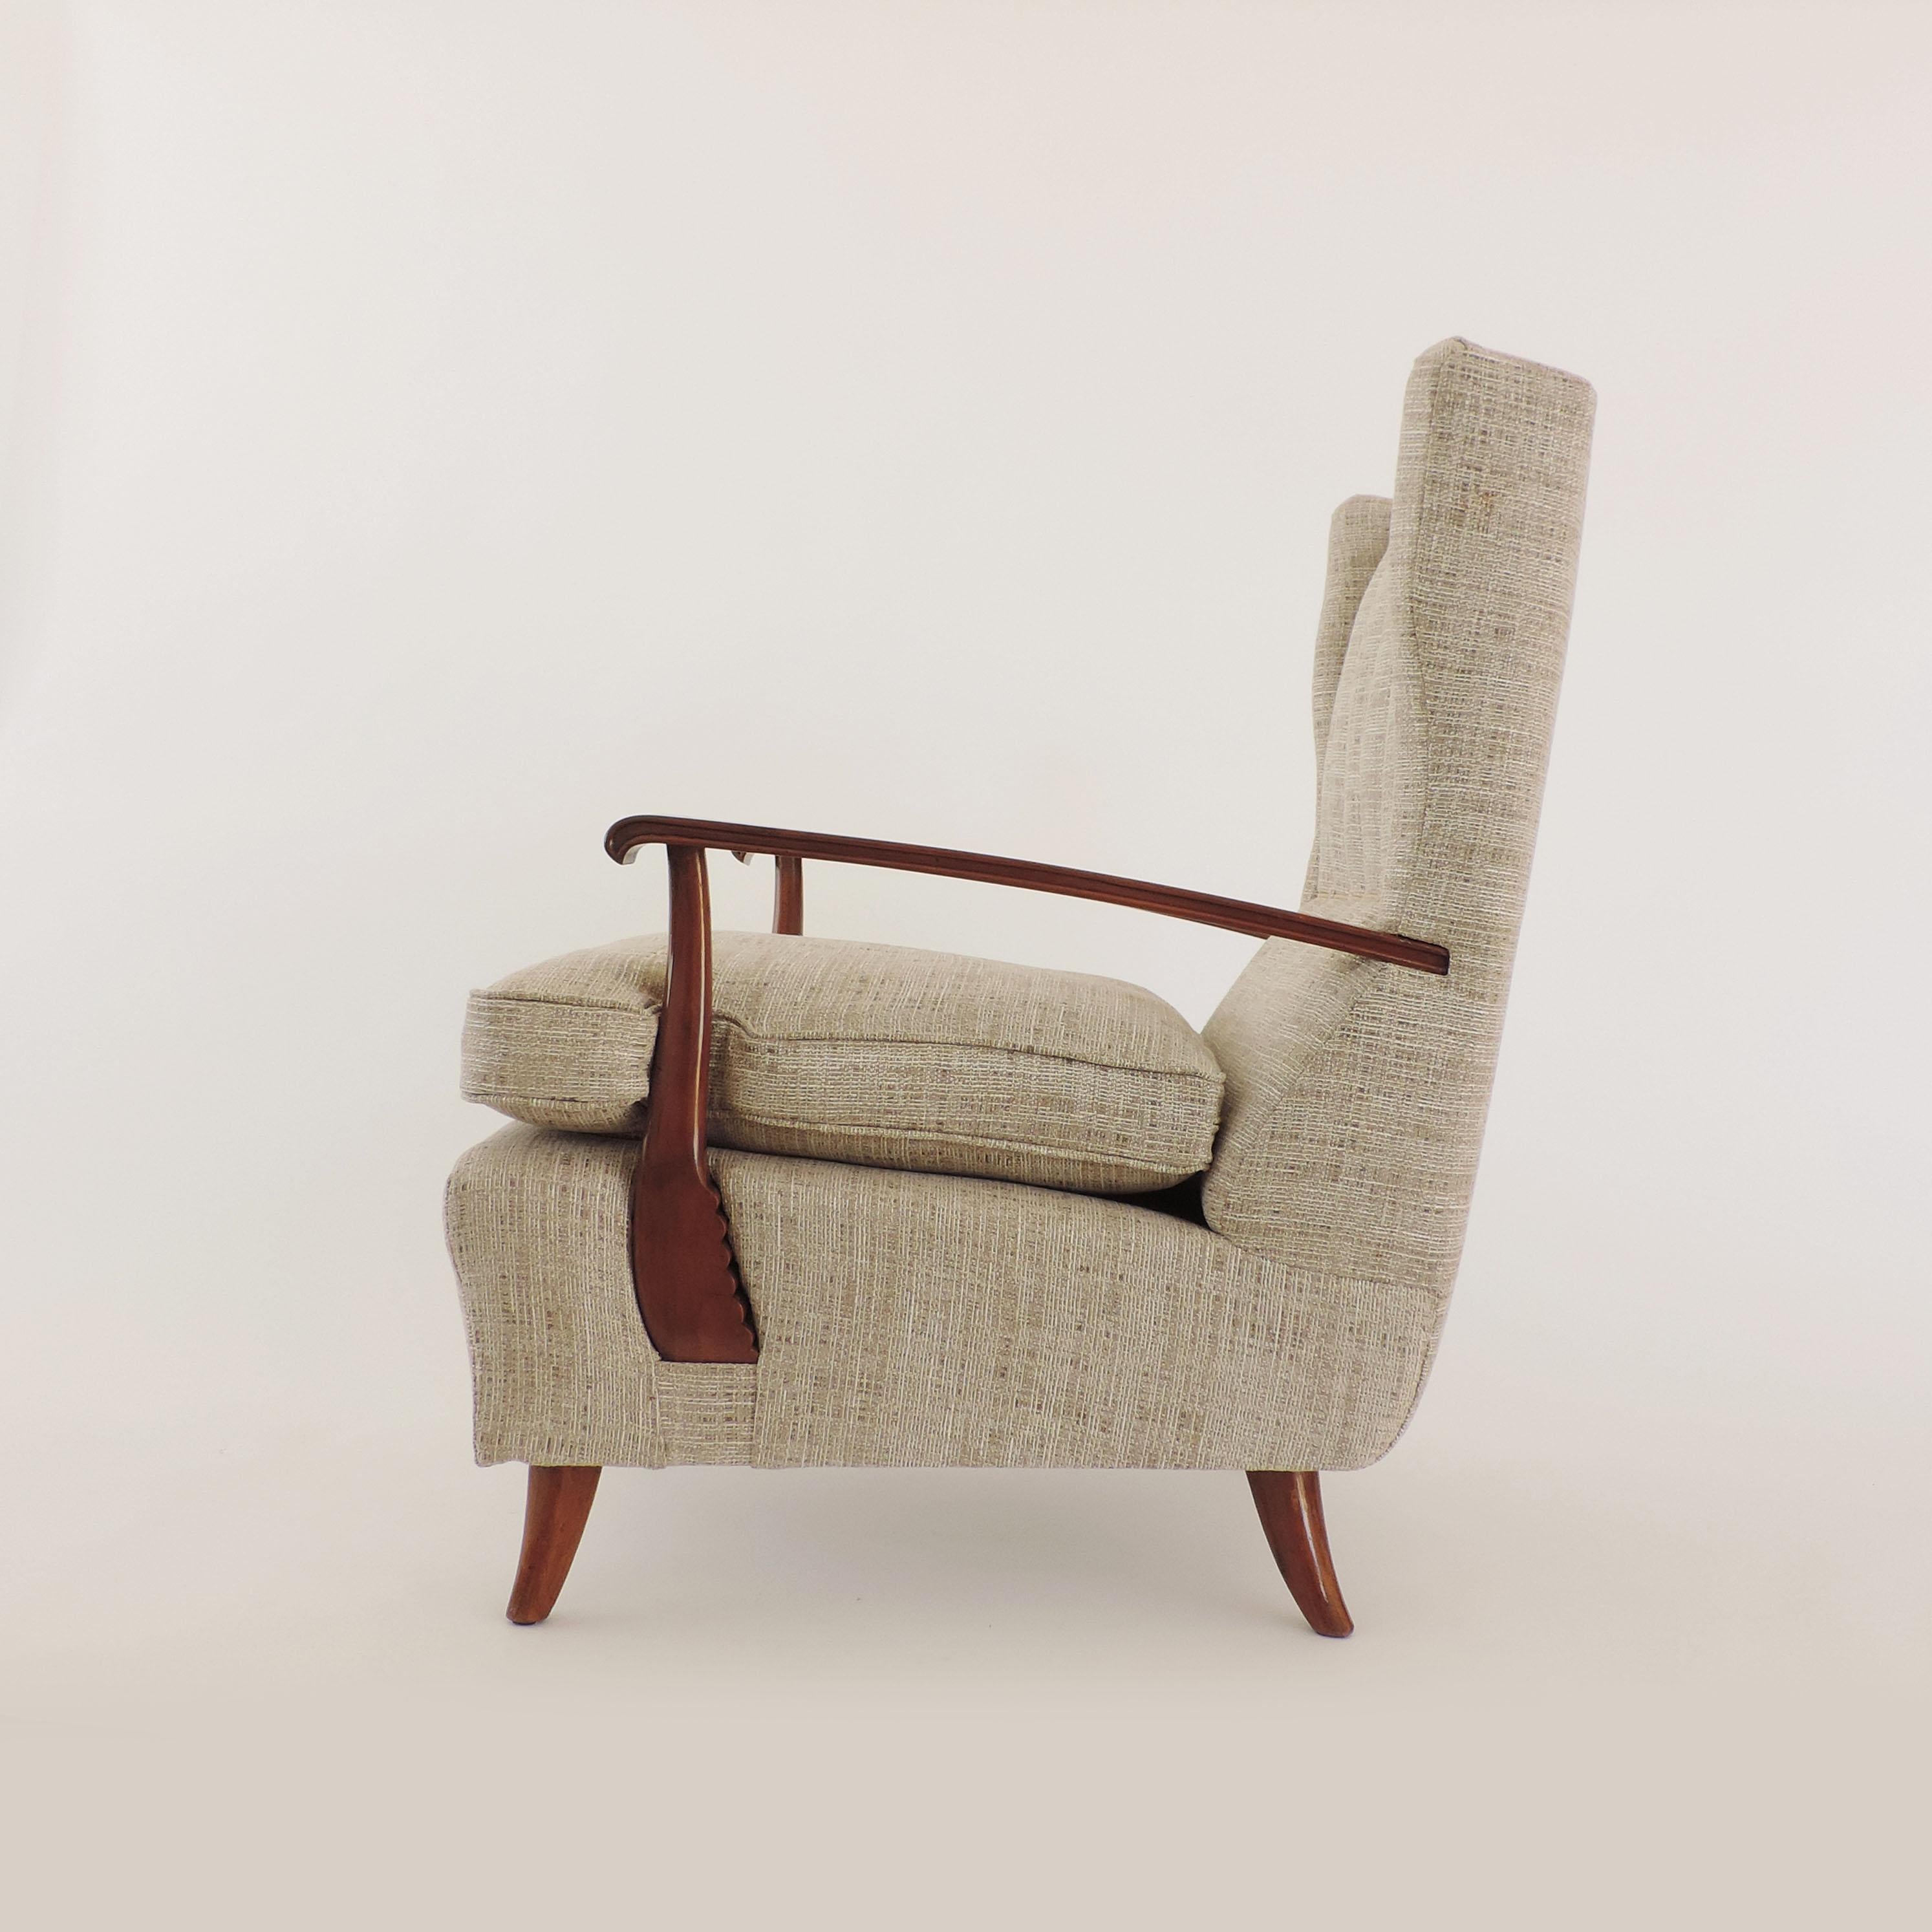 Prächtiges Paar stromlinienförmiger Sessel von Paolo Buffa, 
Geschnitzte Holzteile.
Ref: I mobili di Paolo Buffa S. 23.